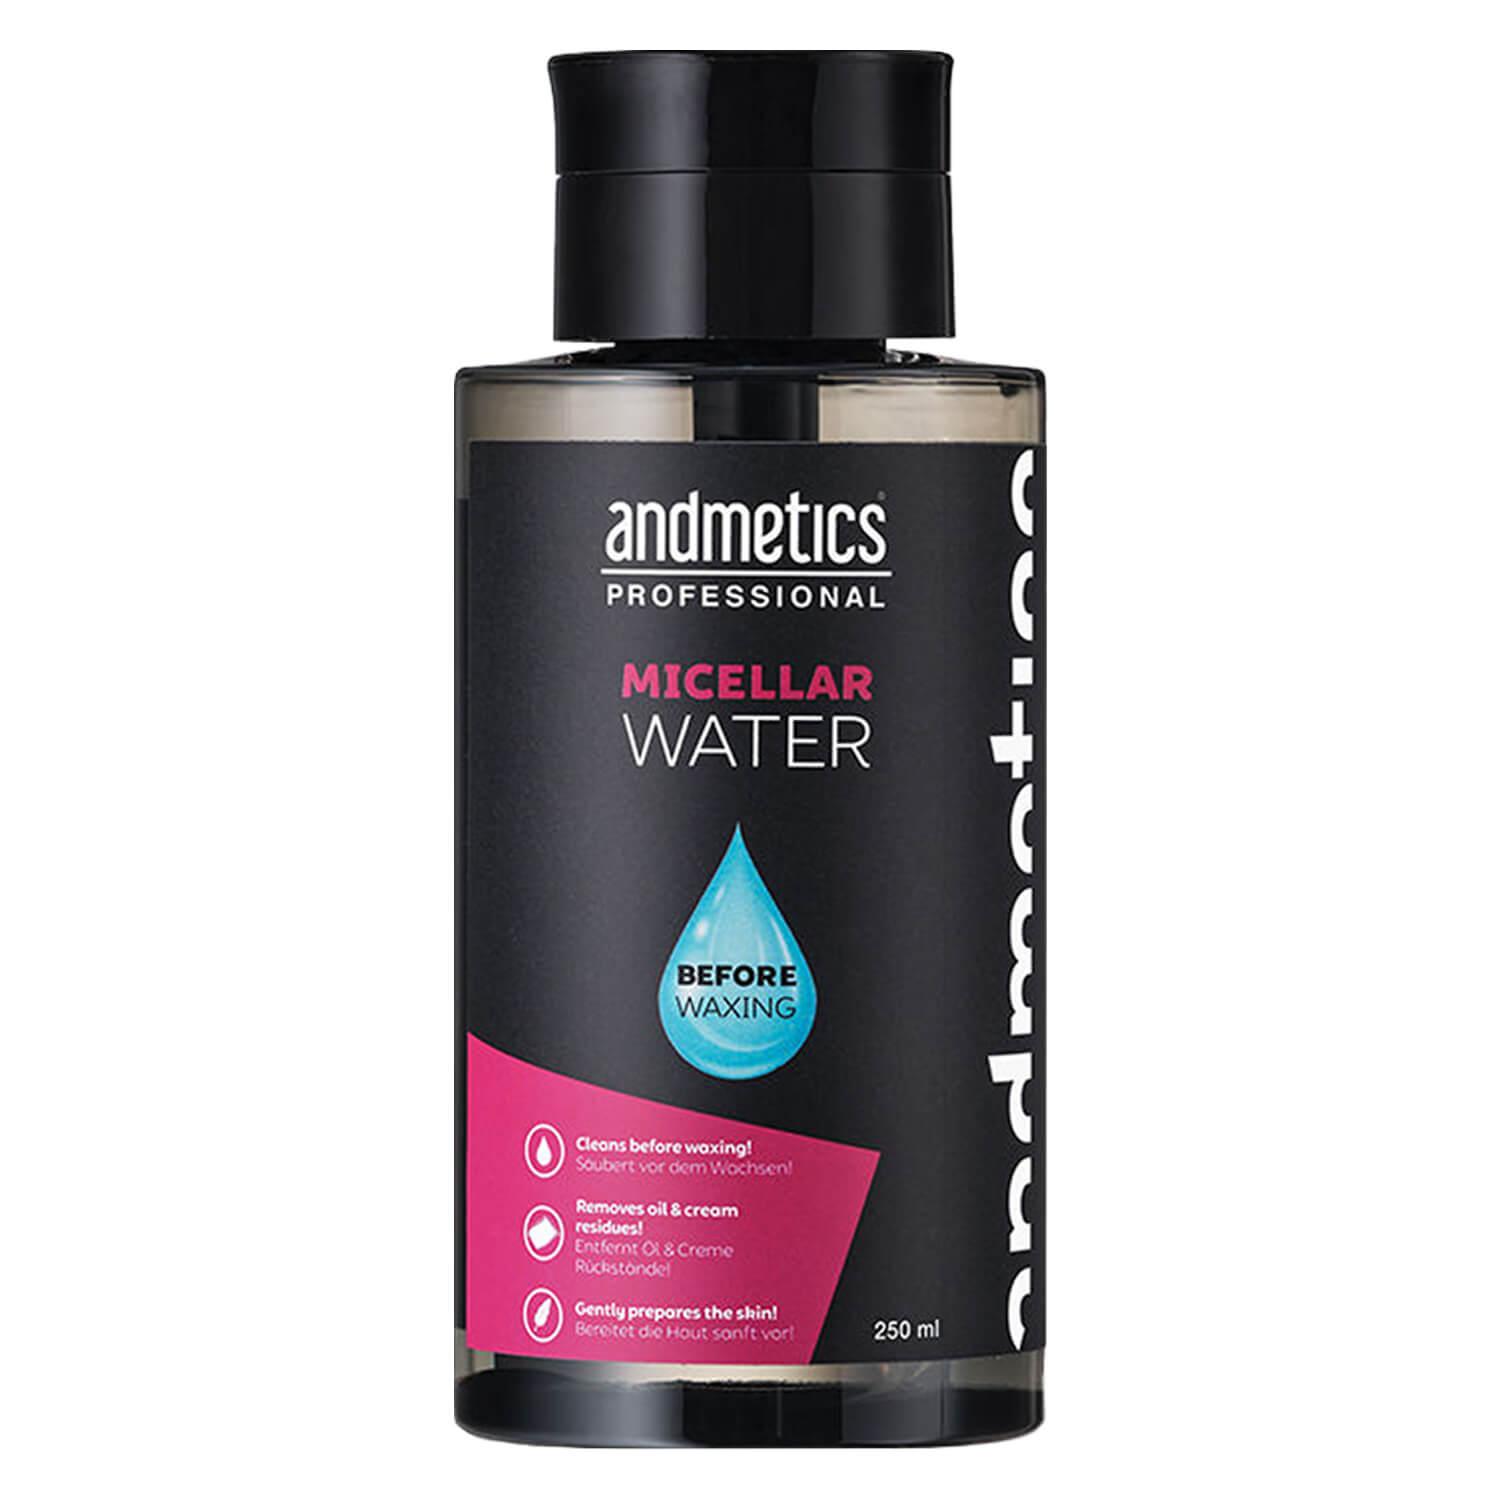 andmetics Professional - Micellar Water